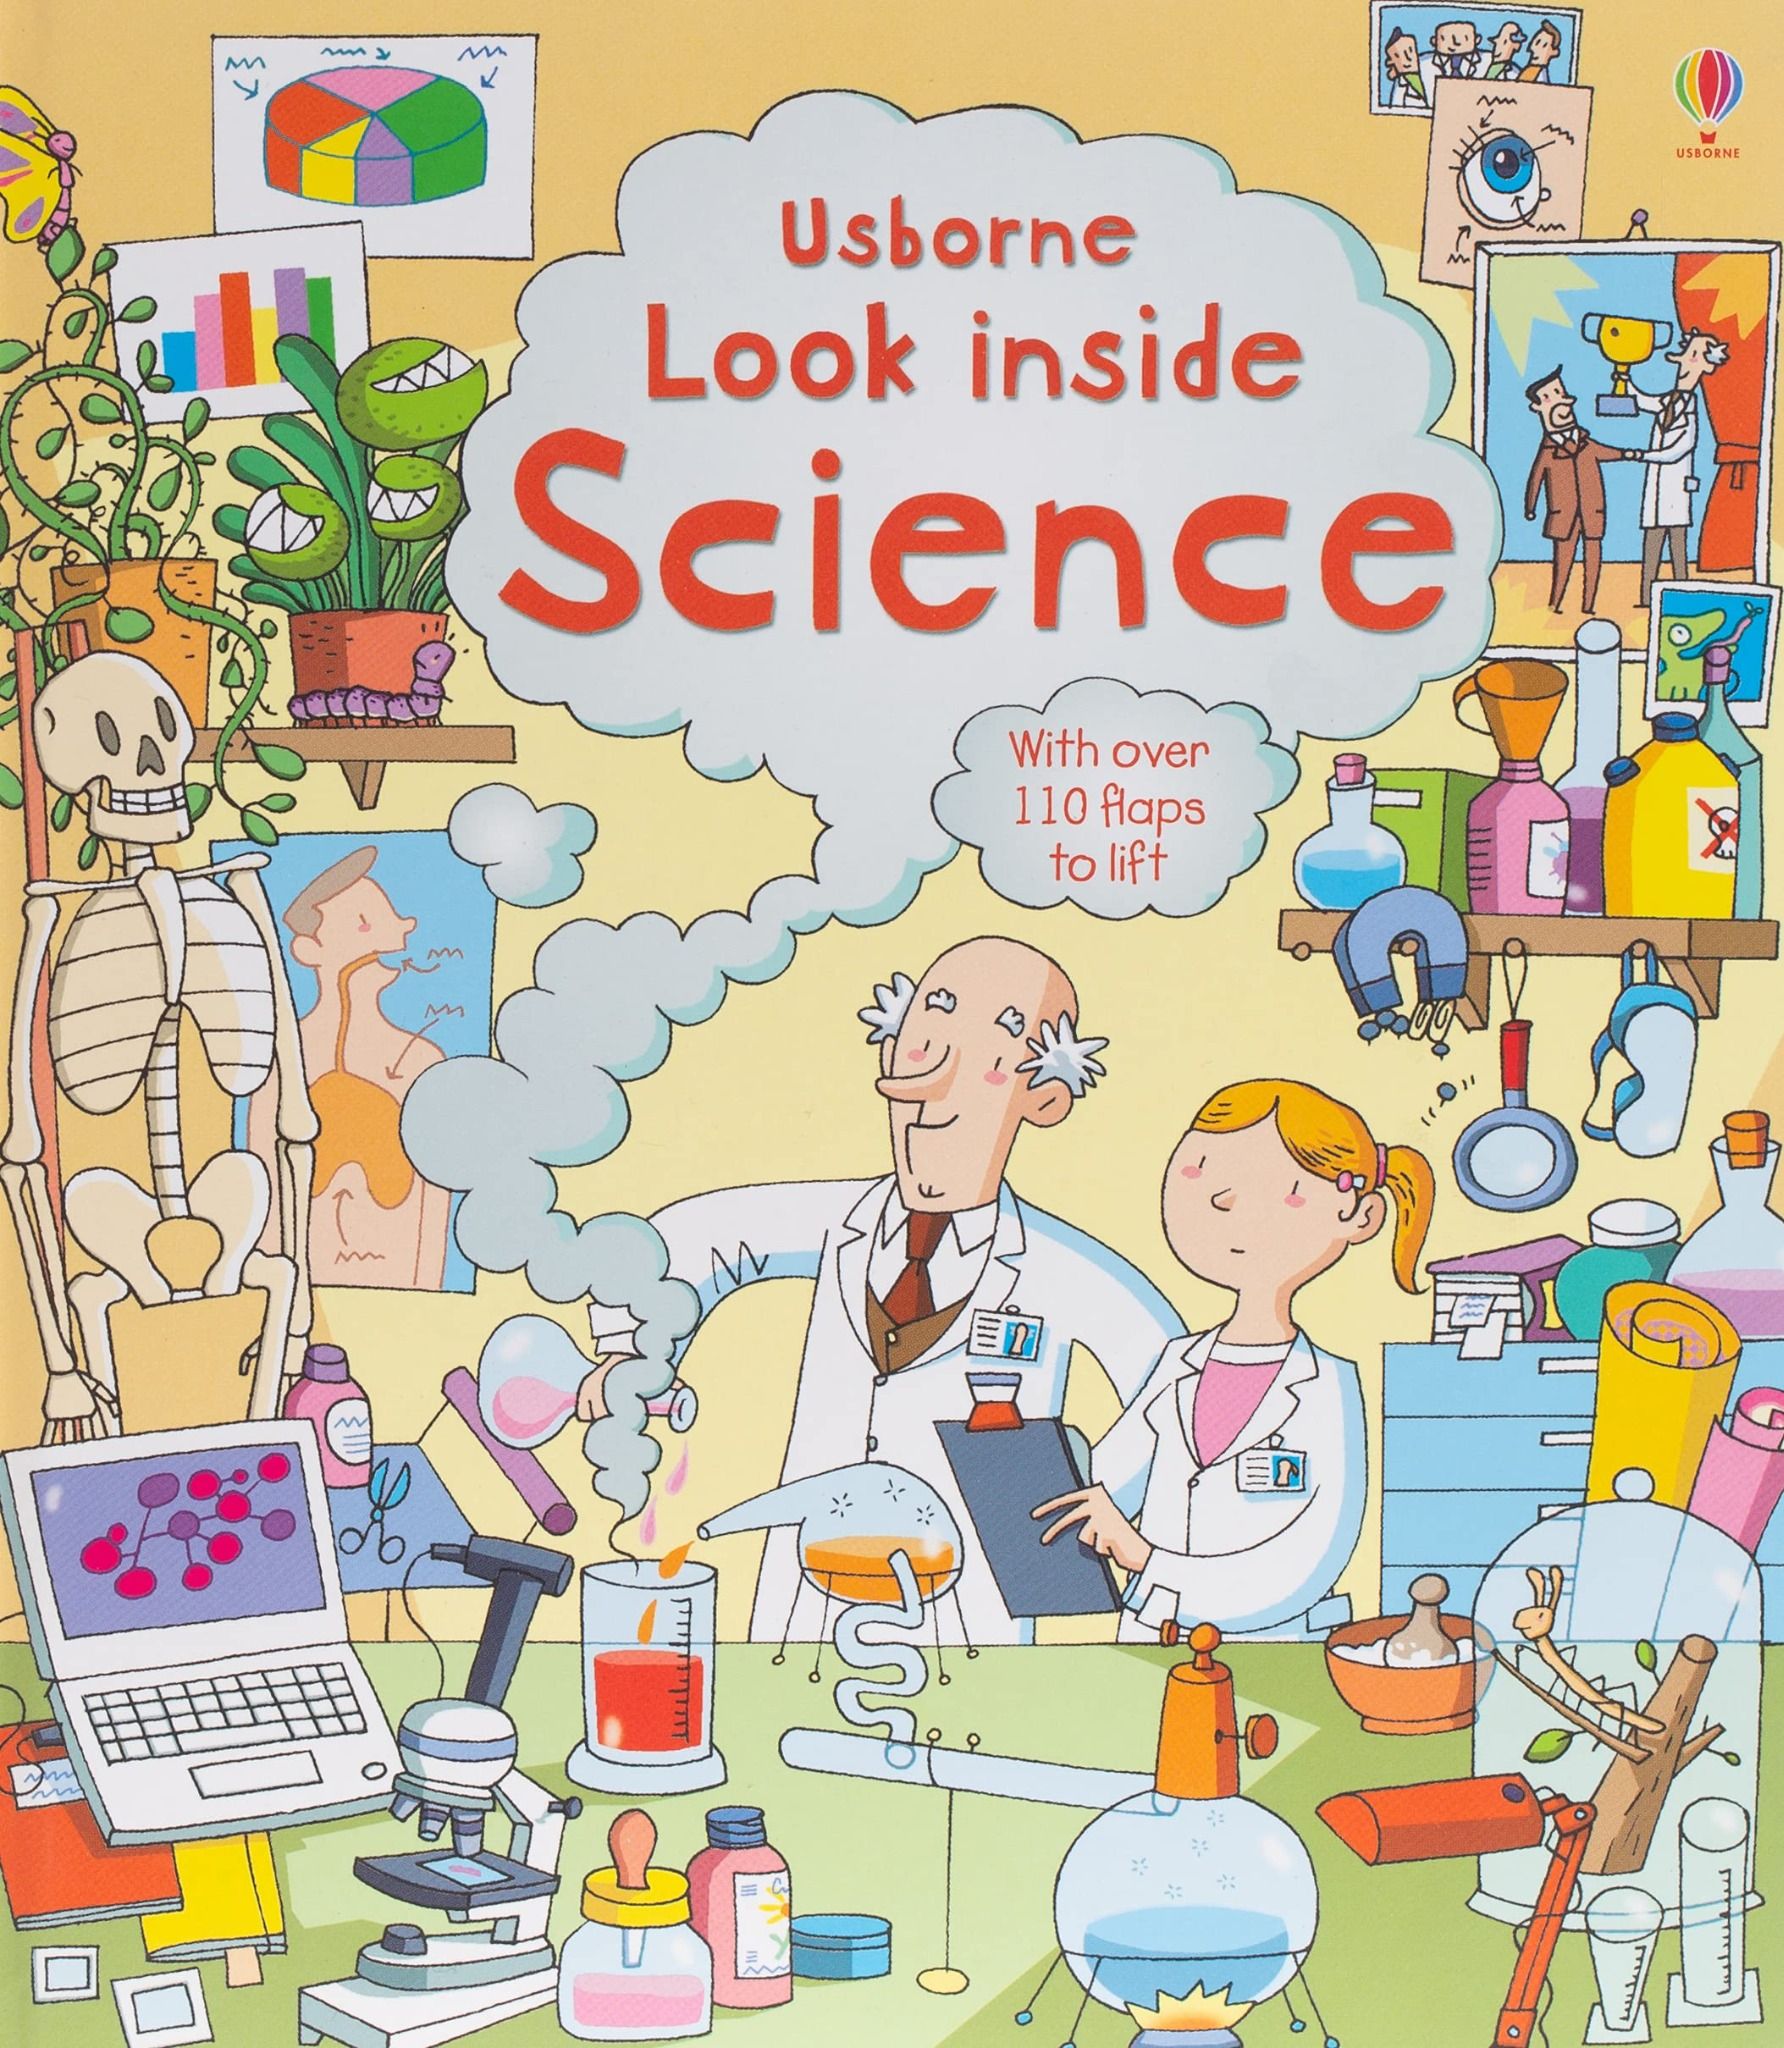  Look inside Science 